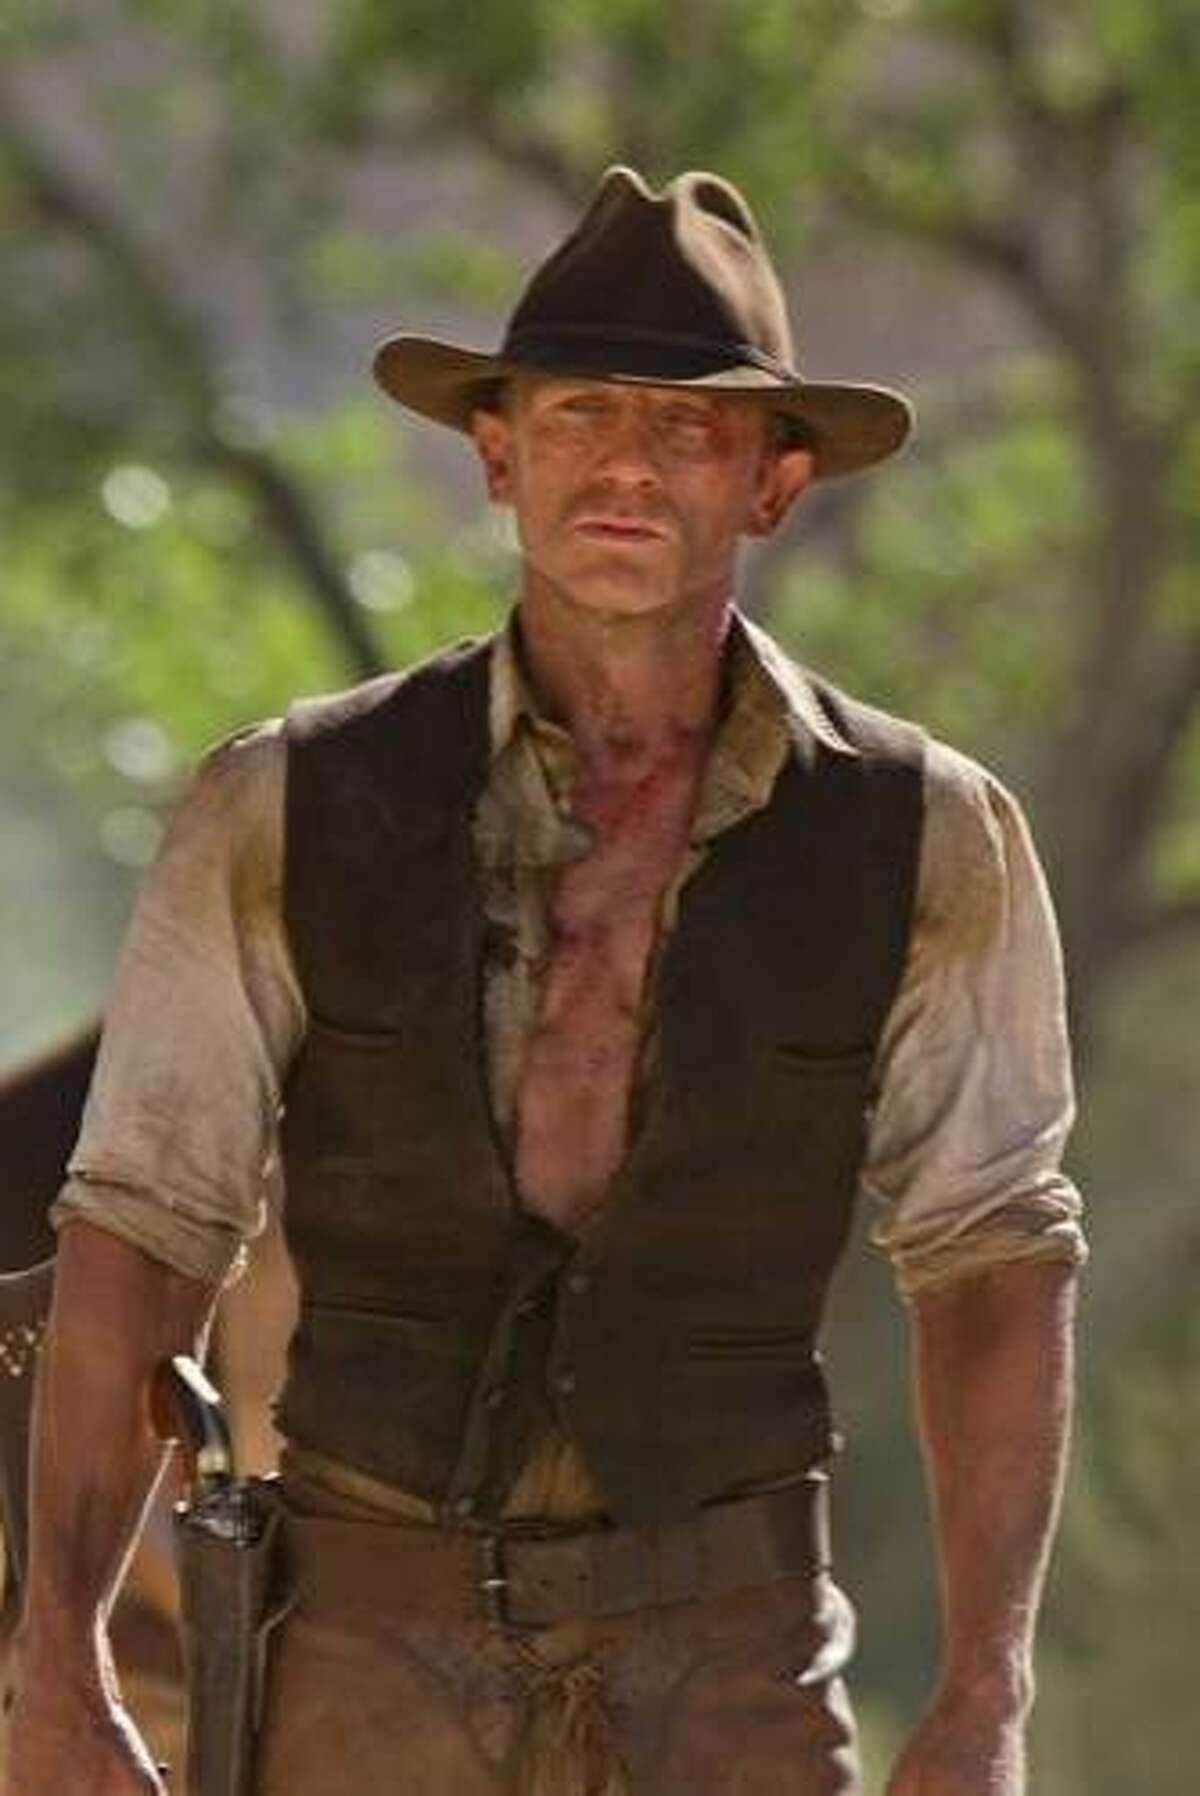 Daniel Craig in "Cowboys and Aliens"